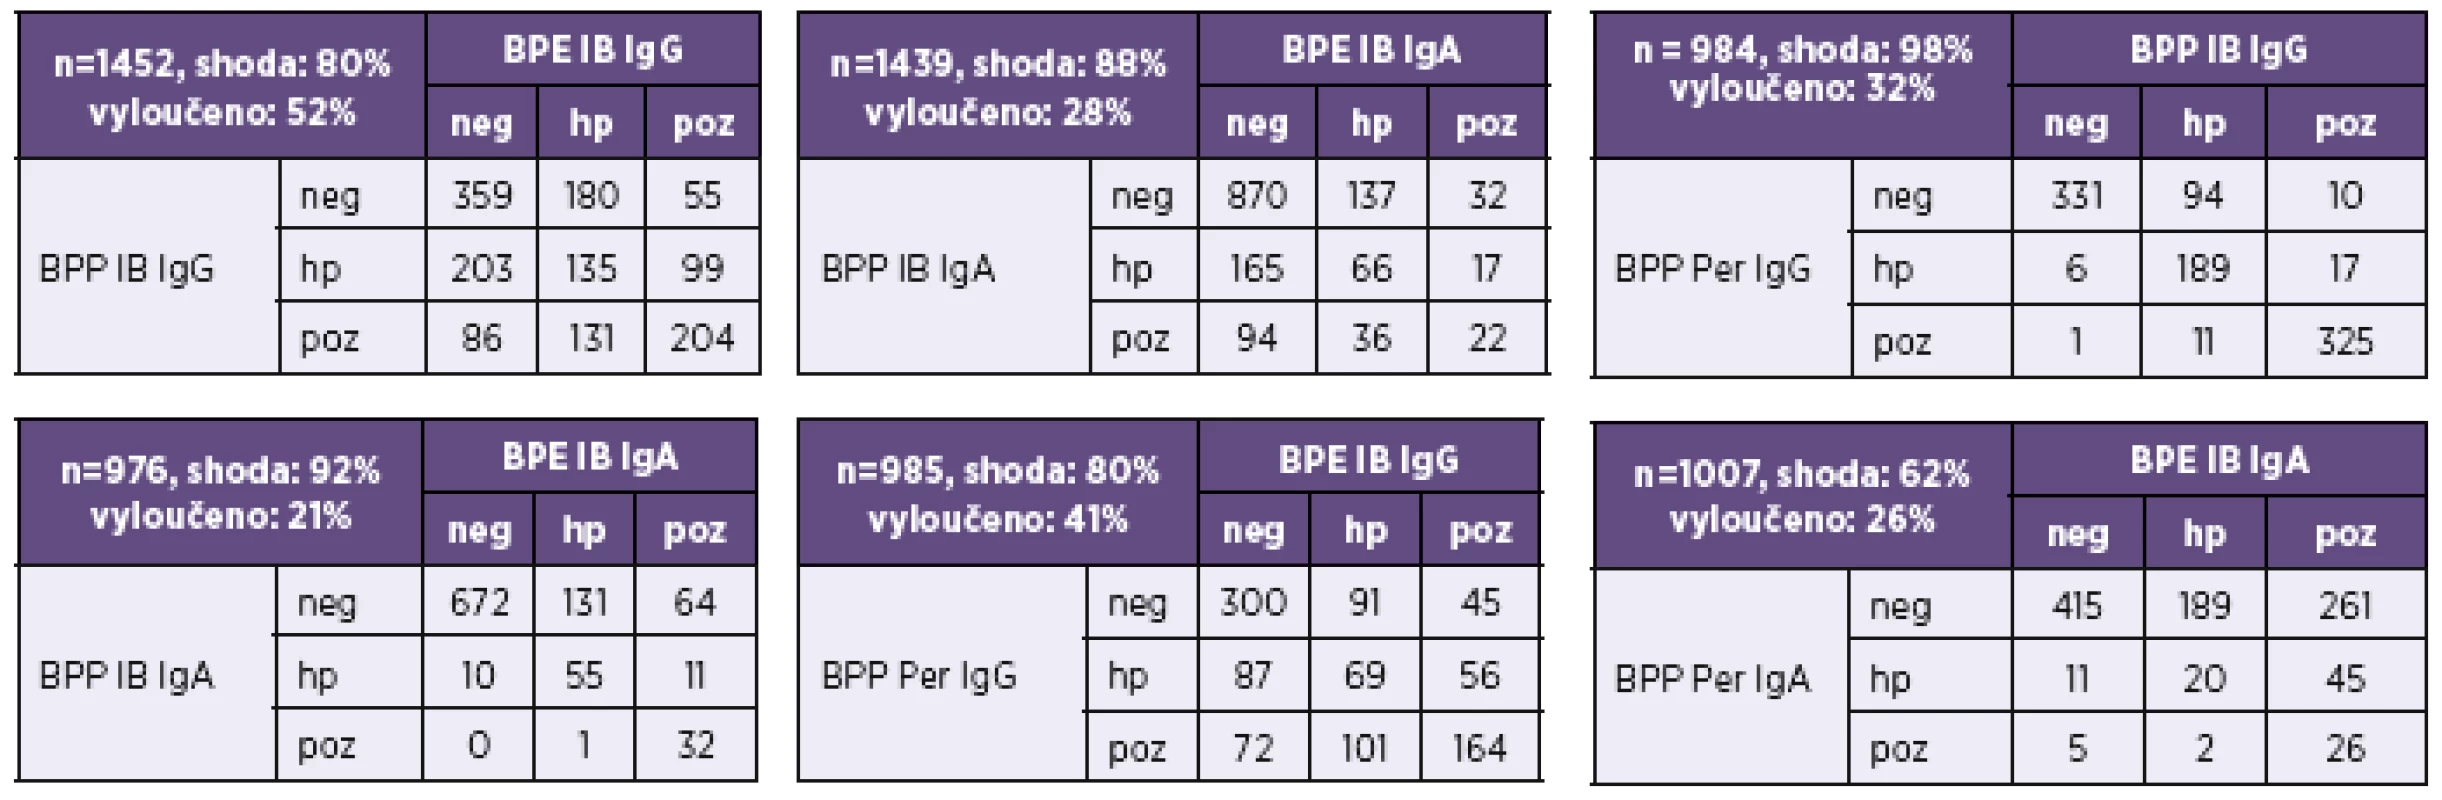 Pertactin v diagnózách bordetelových infekcí
Table 8. Pertactin in Bordetella infection diagnosis